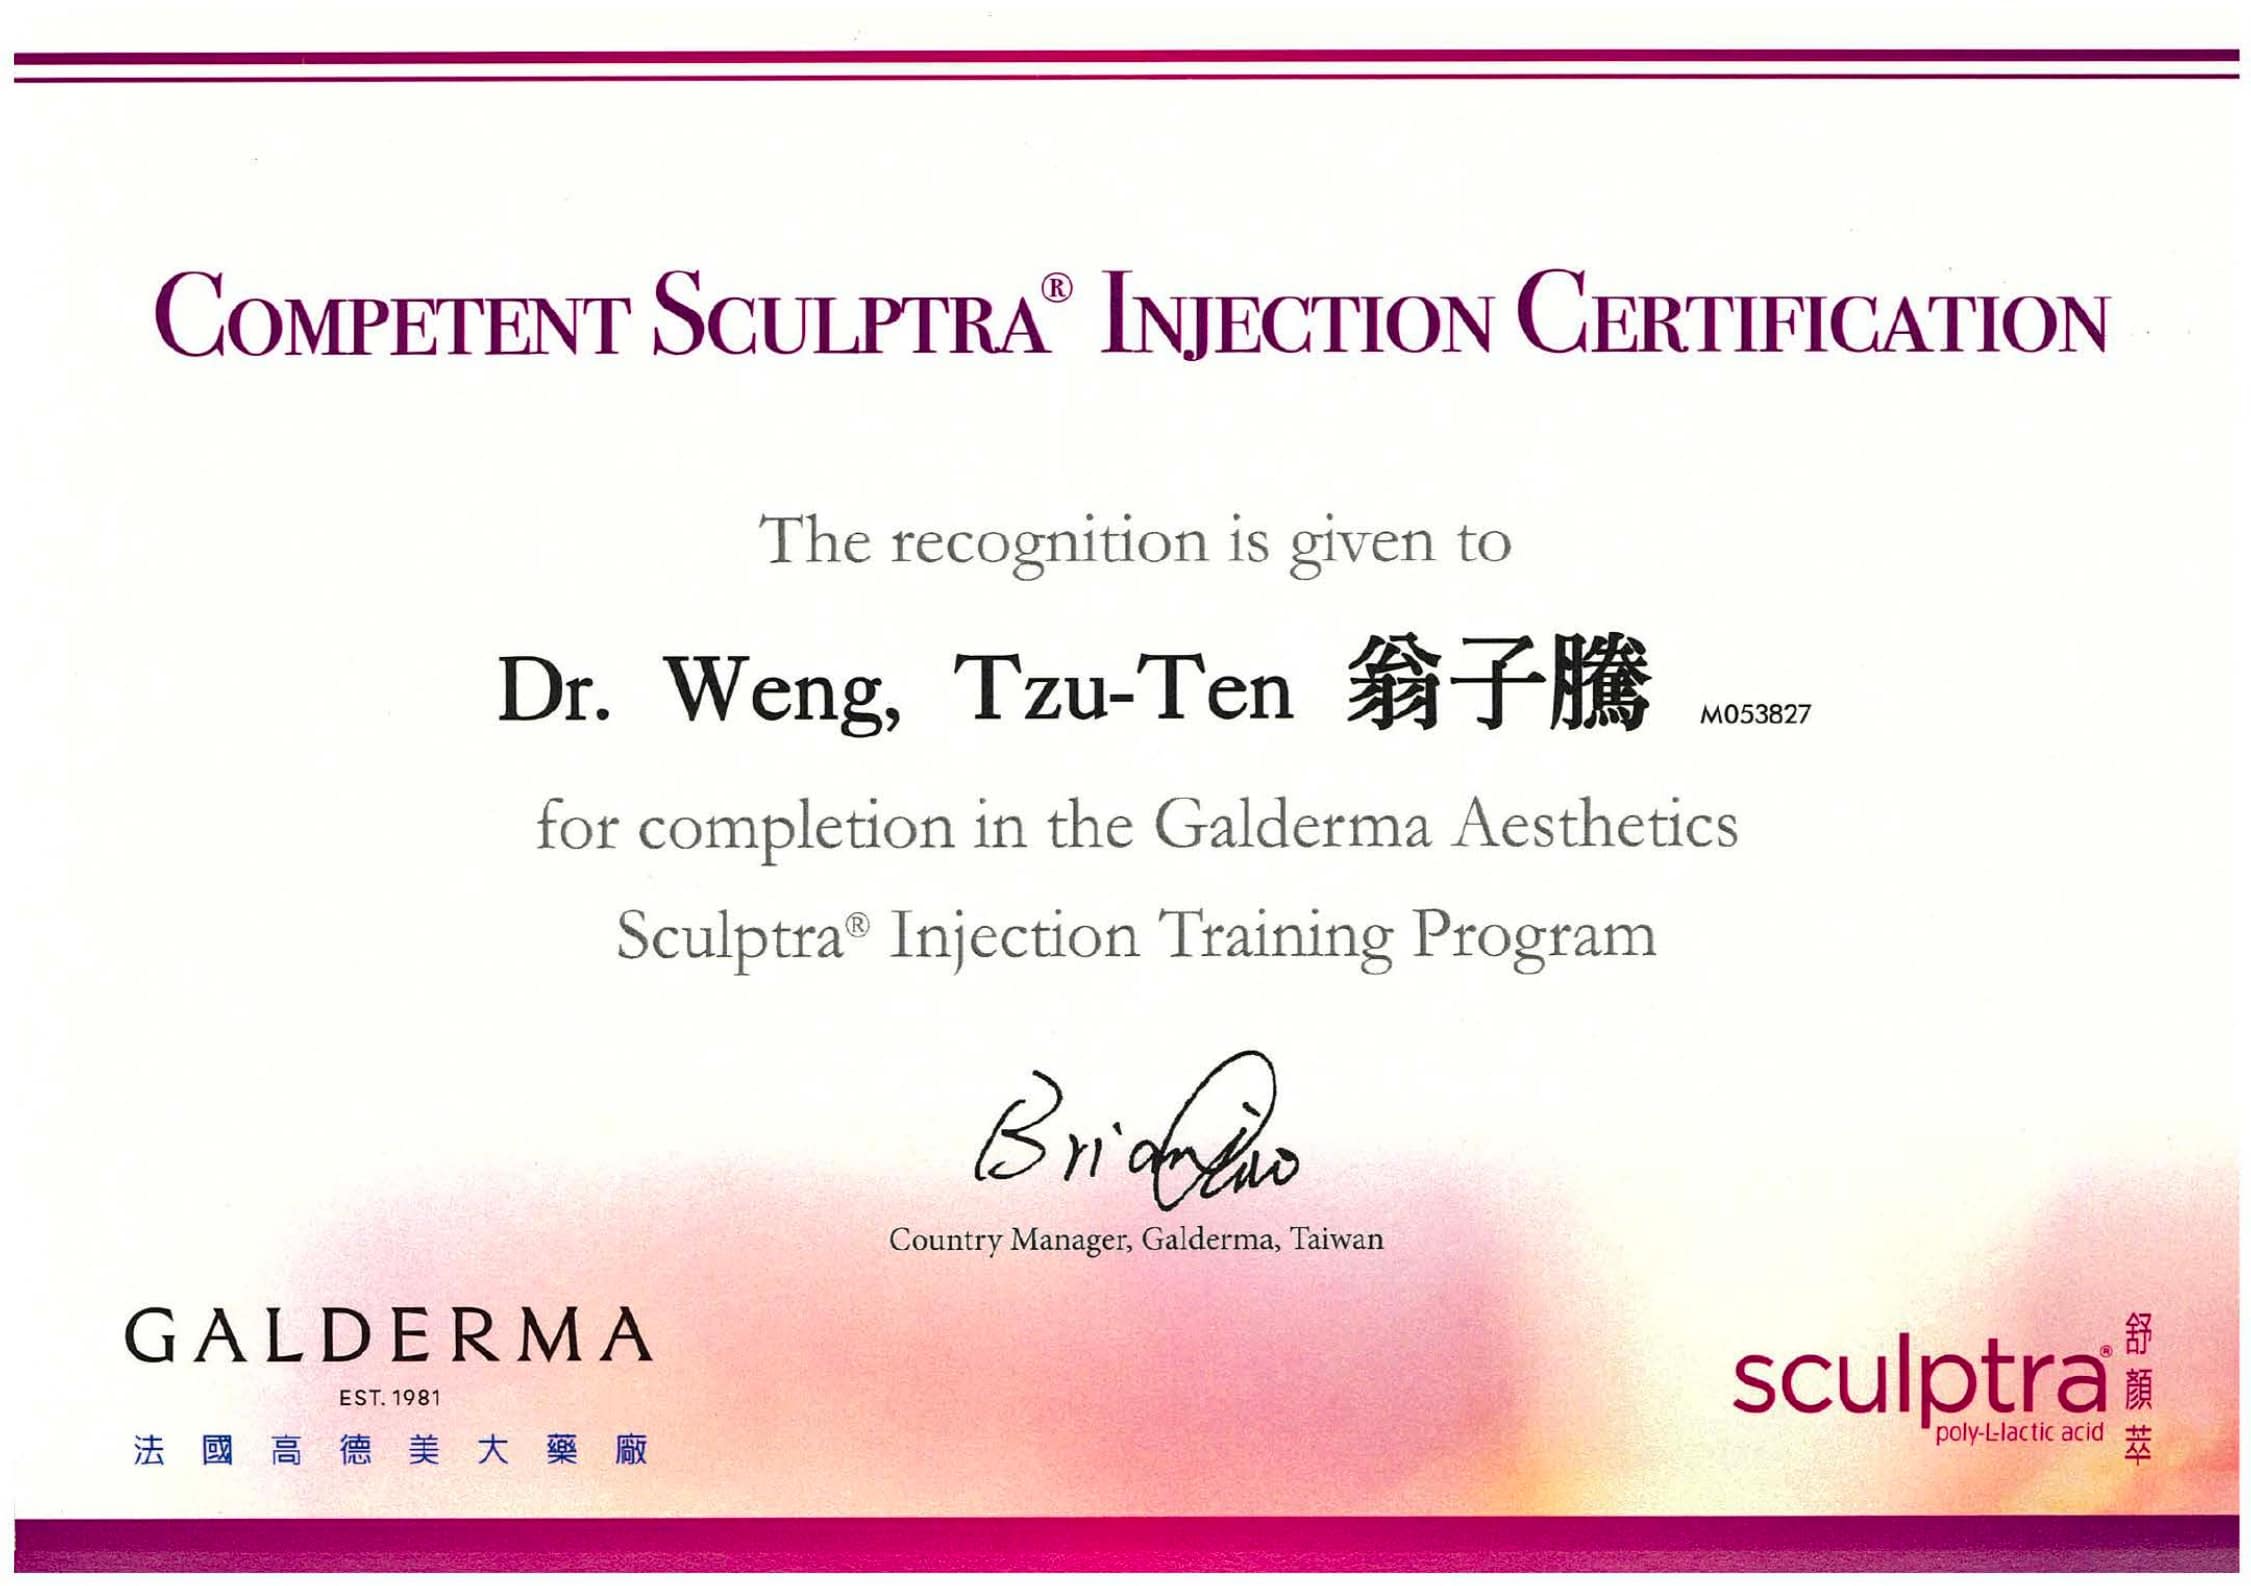 翁子騰醫師-聖宜sculptra certification-2_pages-to-jpg-0001